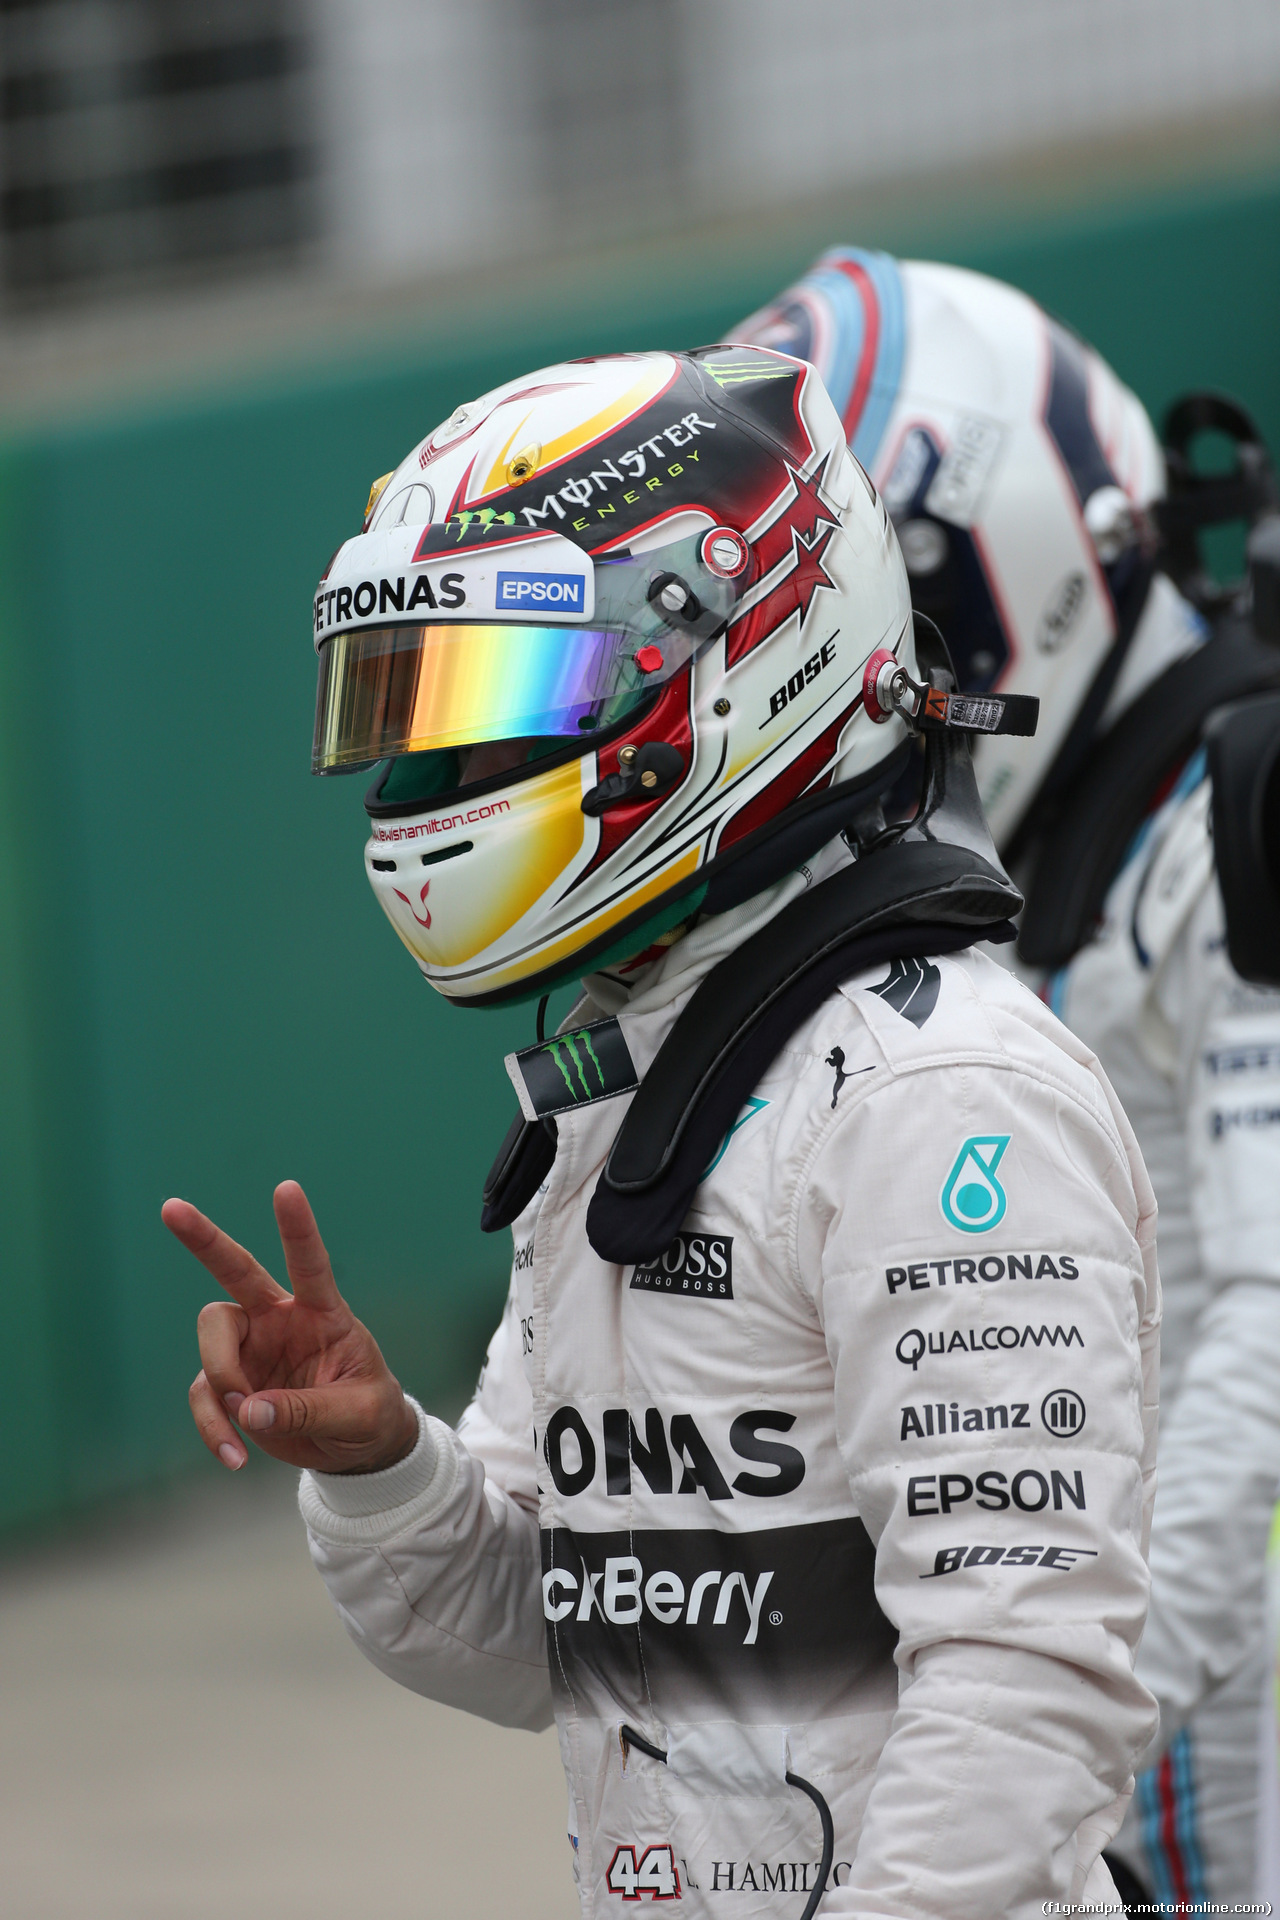 GP AUSTRALIA, 14.03.2014 - Qualifiche, Lewis Hamilton (GBR) Mercedes AMG F1 W06 pole position